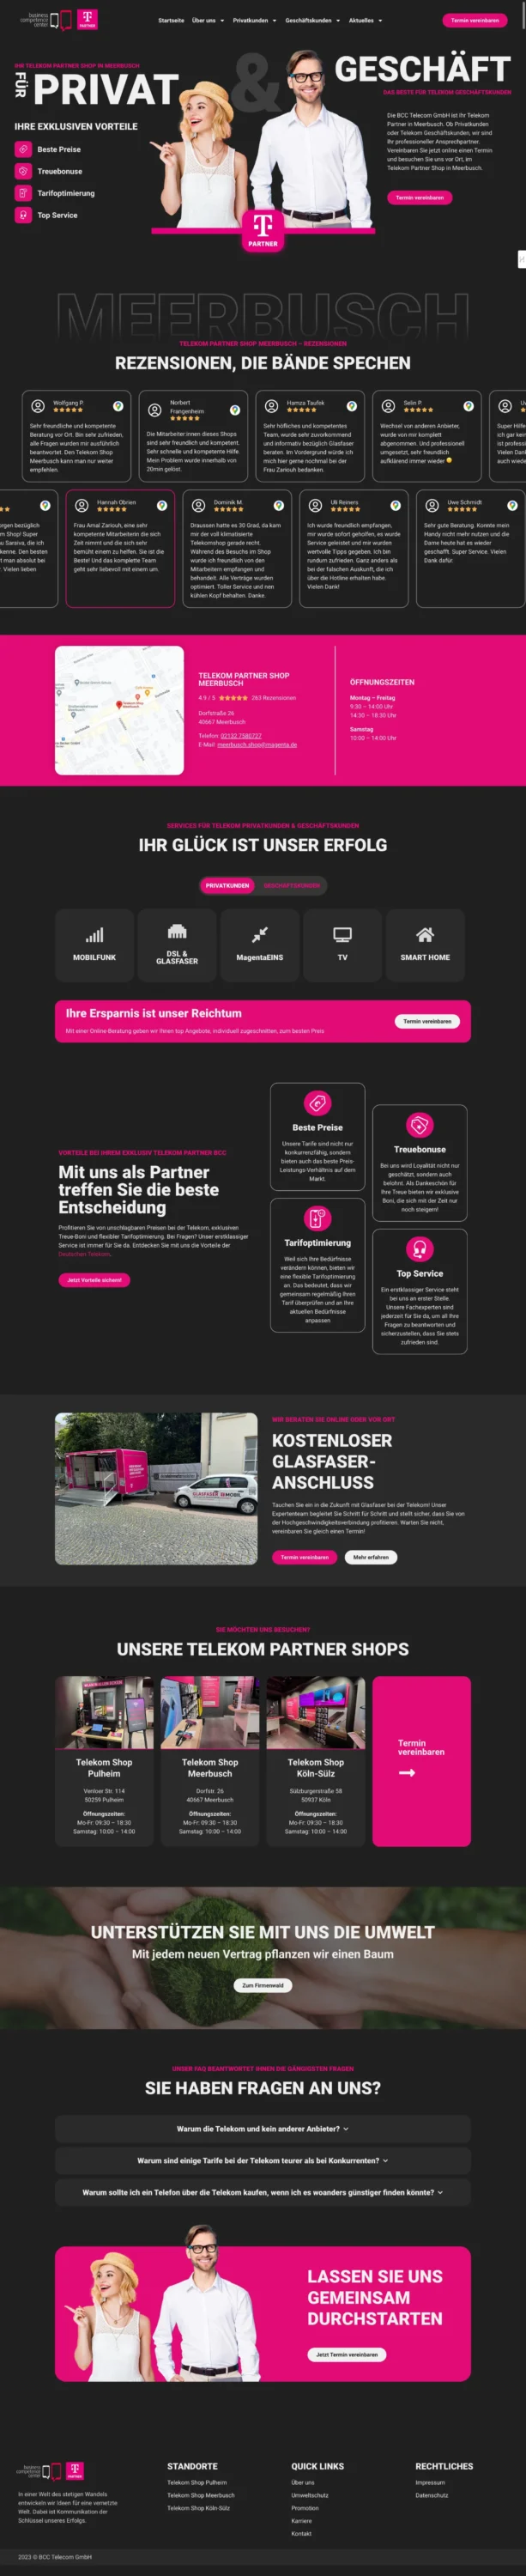 Telekom Partner Shop Meerbusch Webseite